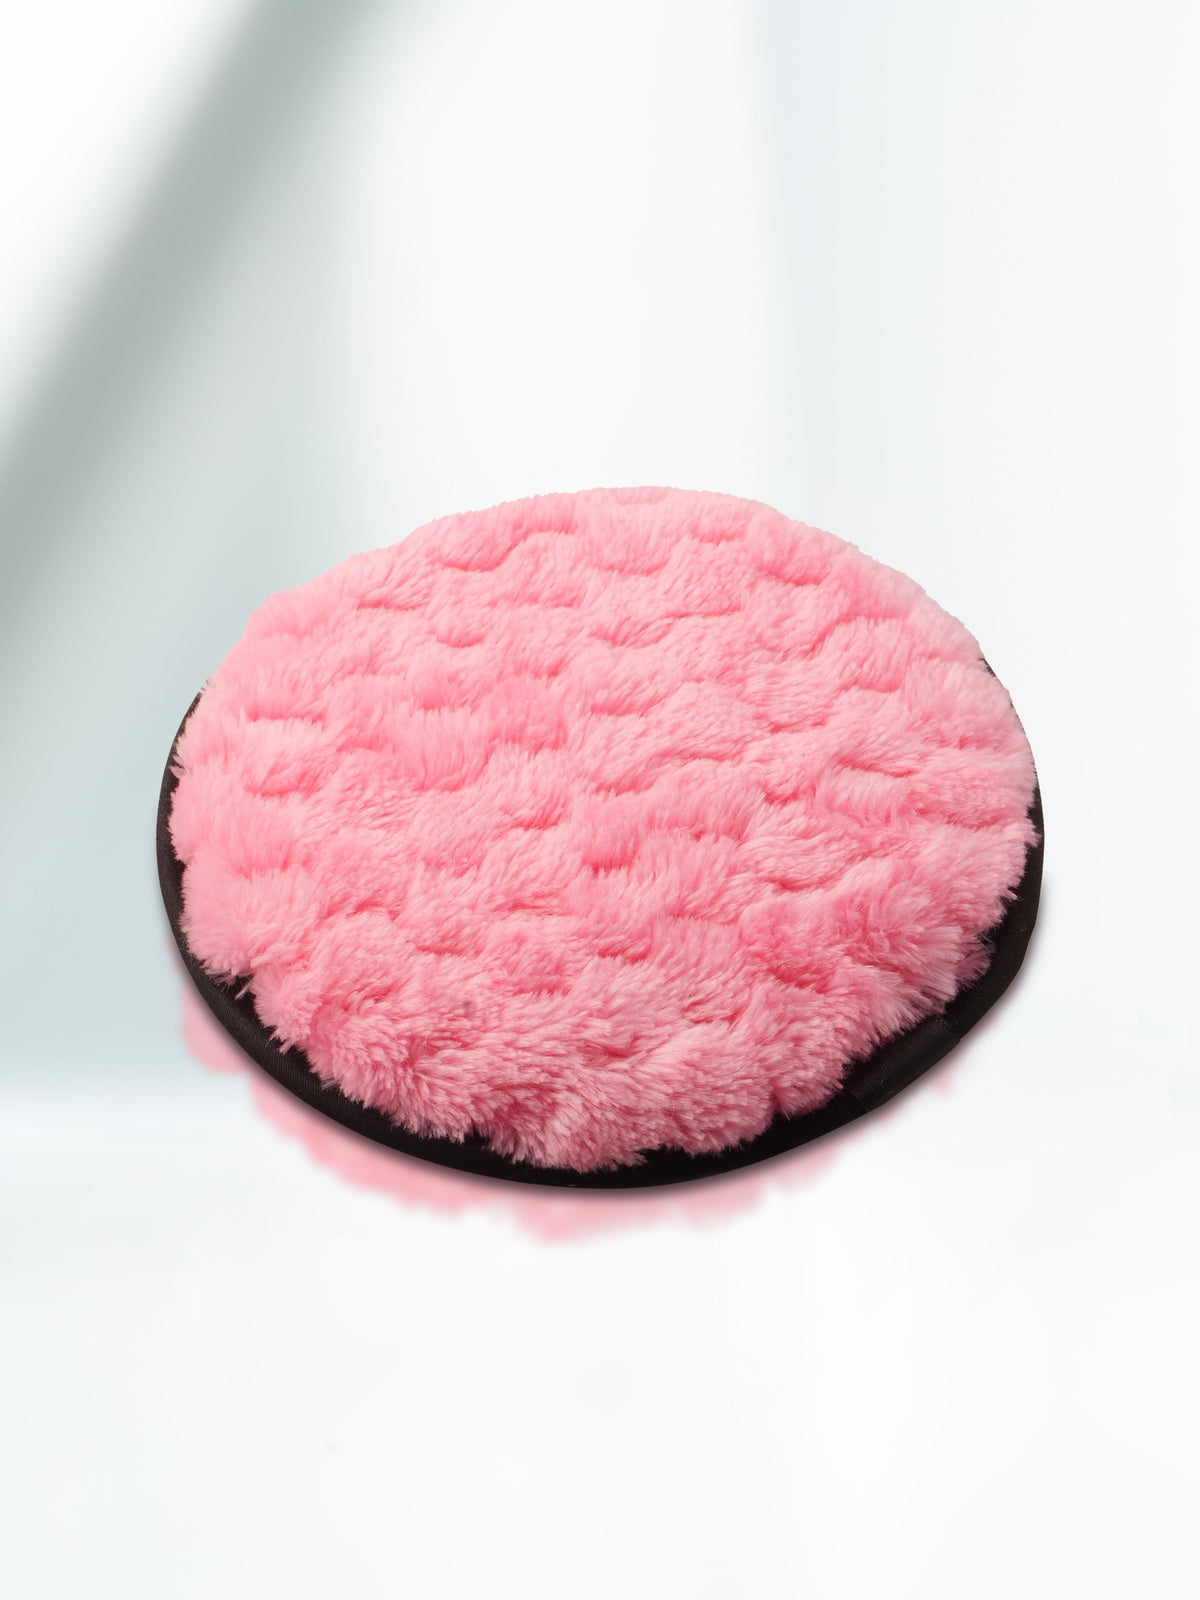 Clean Sponge Makeup Remover Pads – JOOPZY